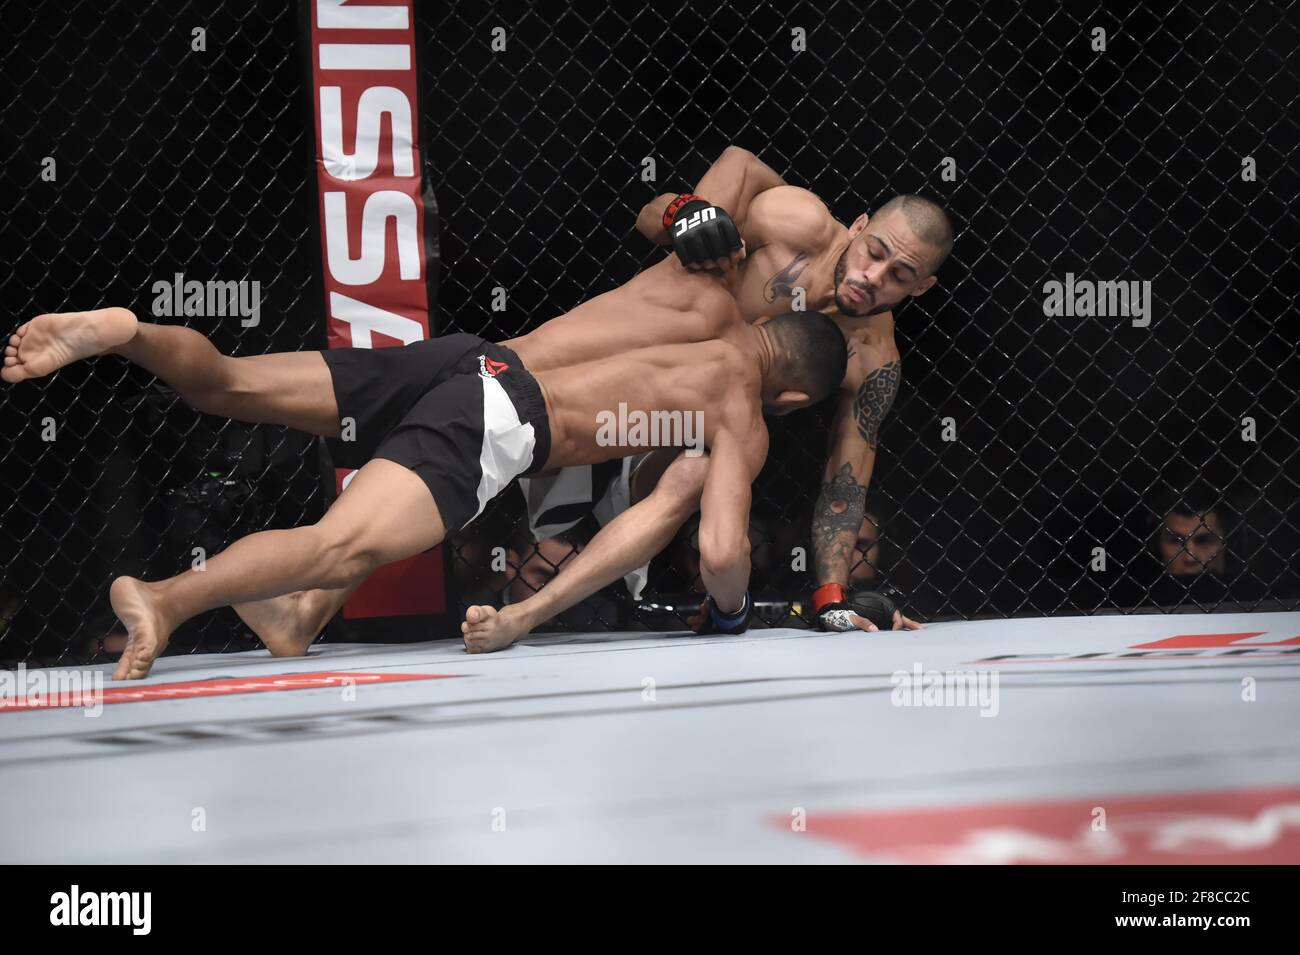 Rio de Janeiro-Brasile 10 gennaio 2020, UFC e i suoi combattimenti in Brasile Foto Stock